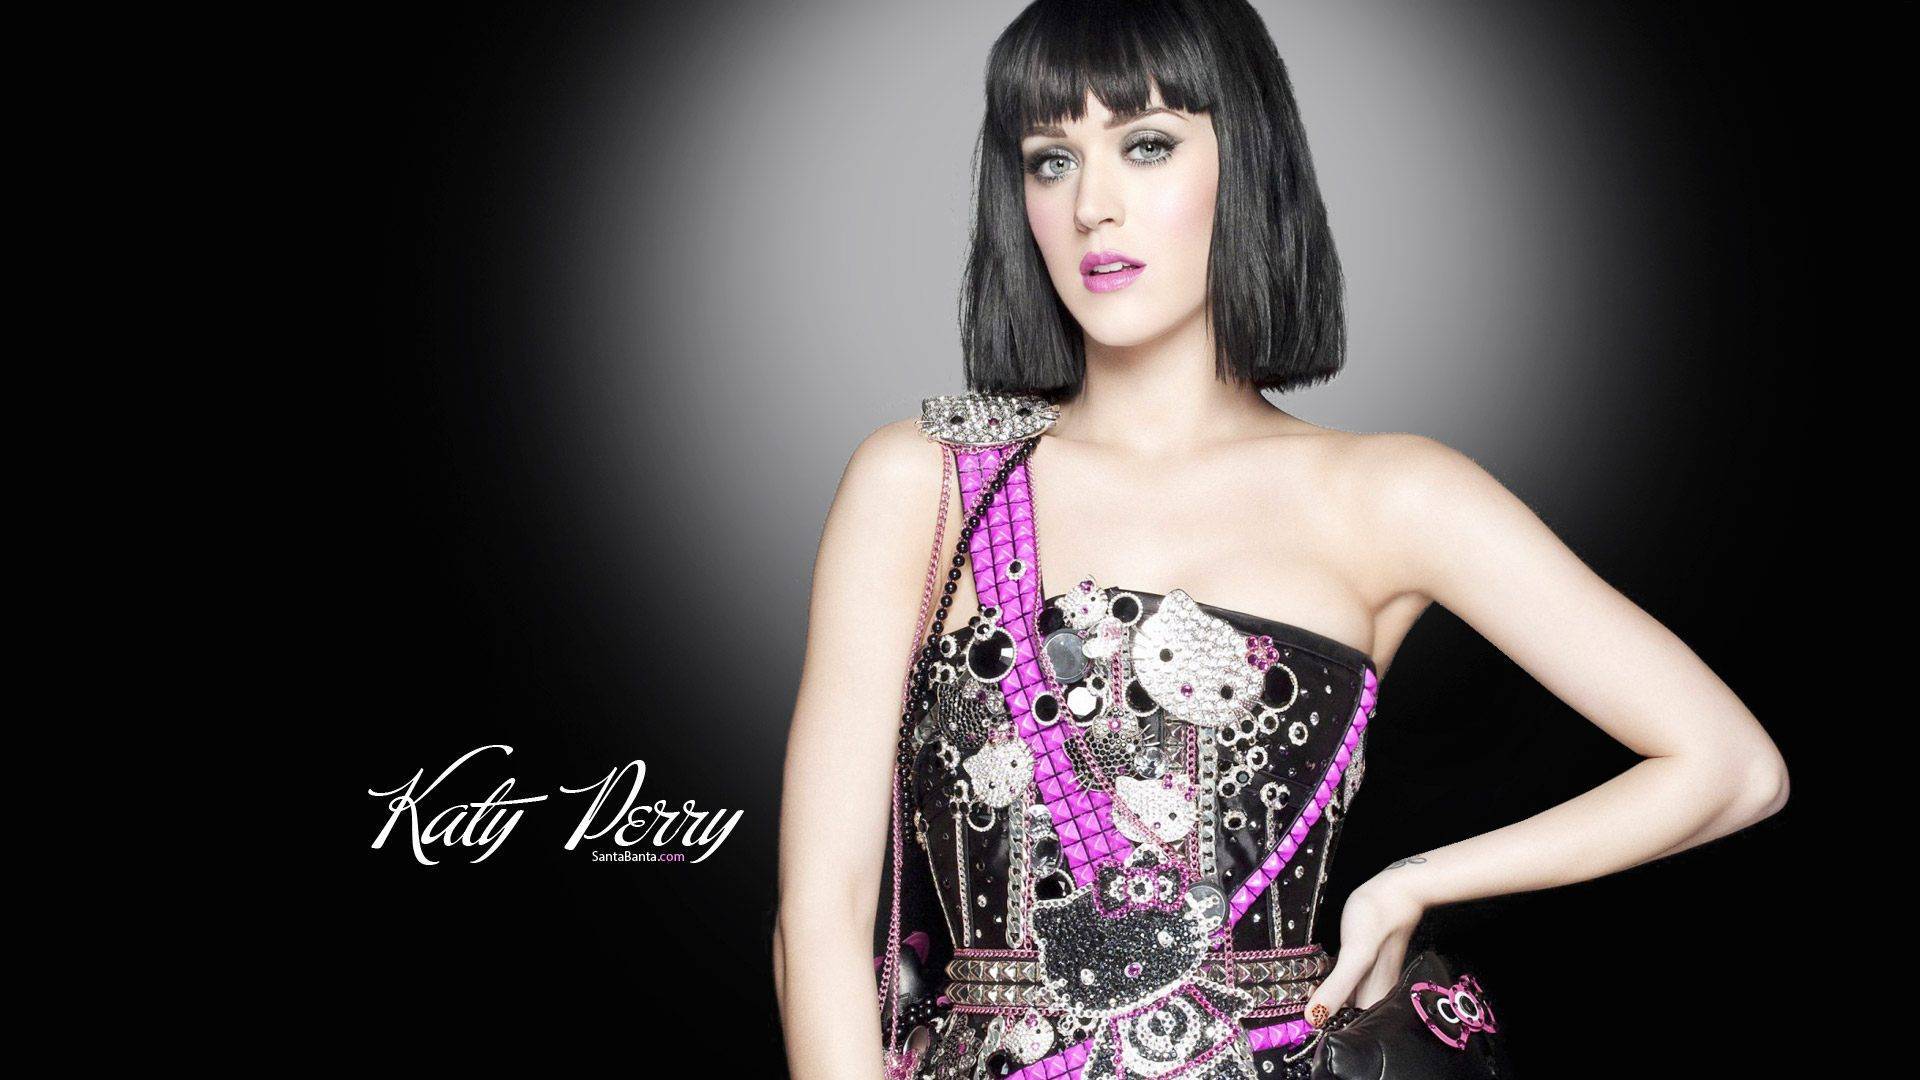 Perry Katy Widescreen Hot American Actress Full HD Wallpaper